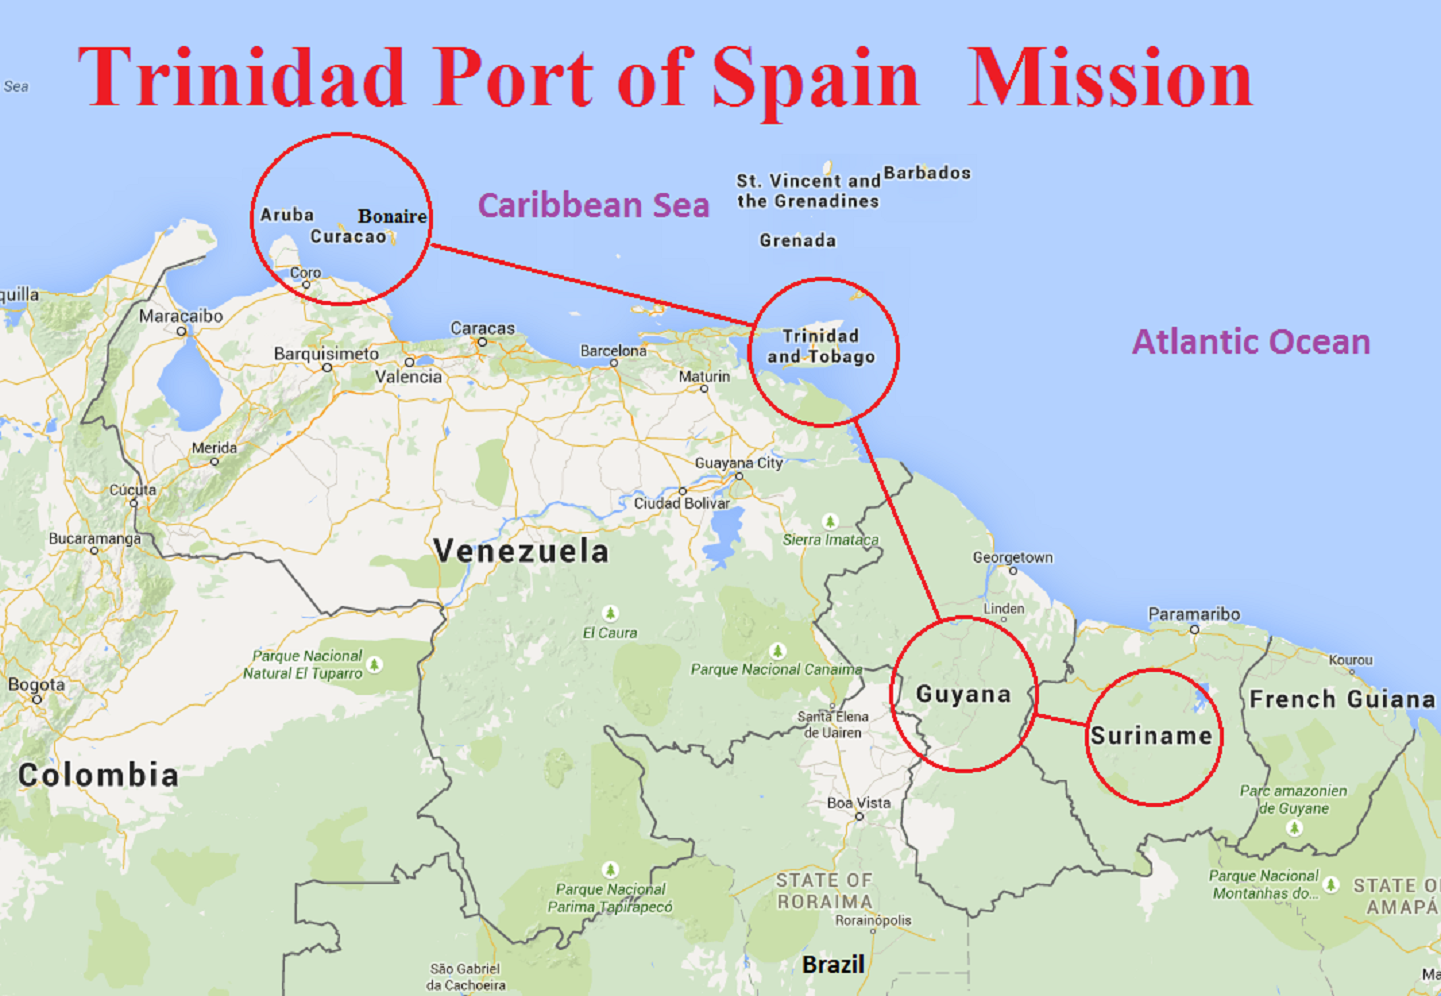 Trinidad Port of Spain Mission